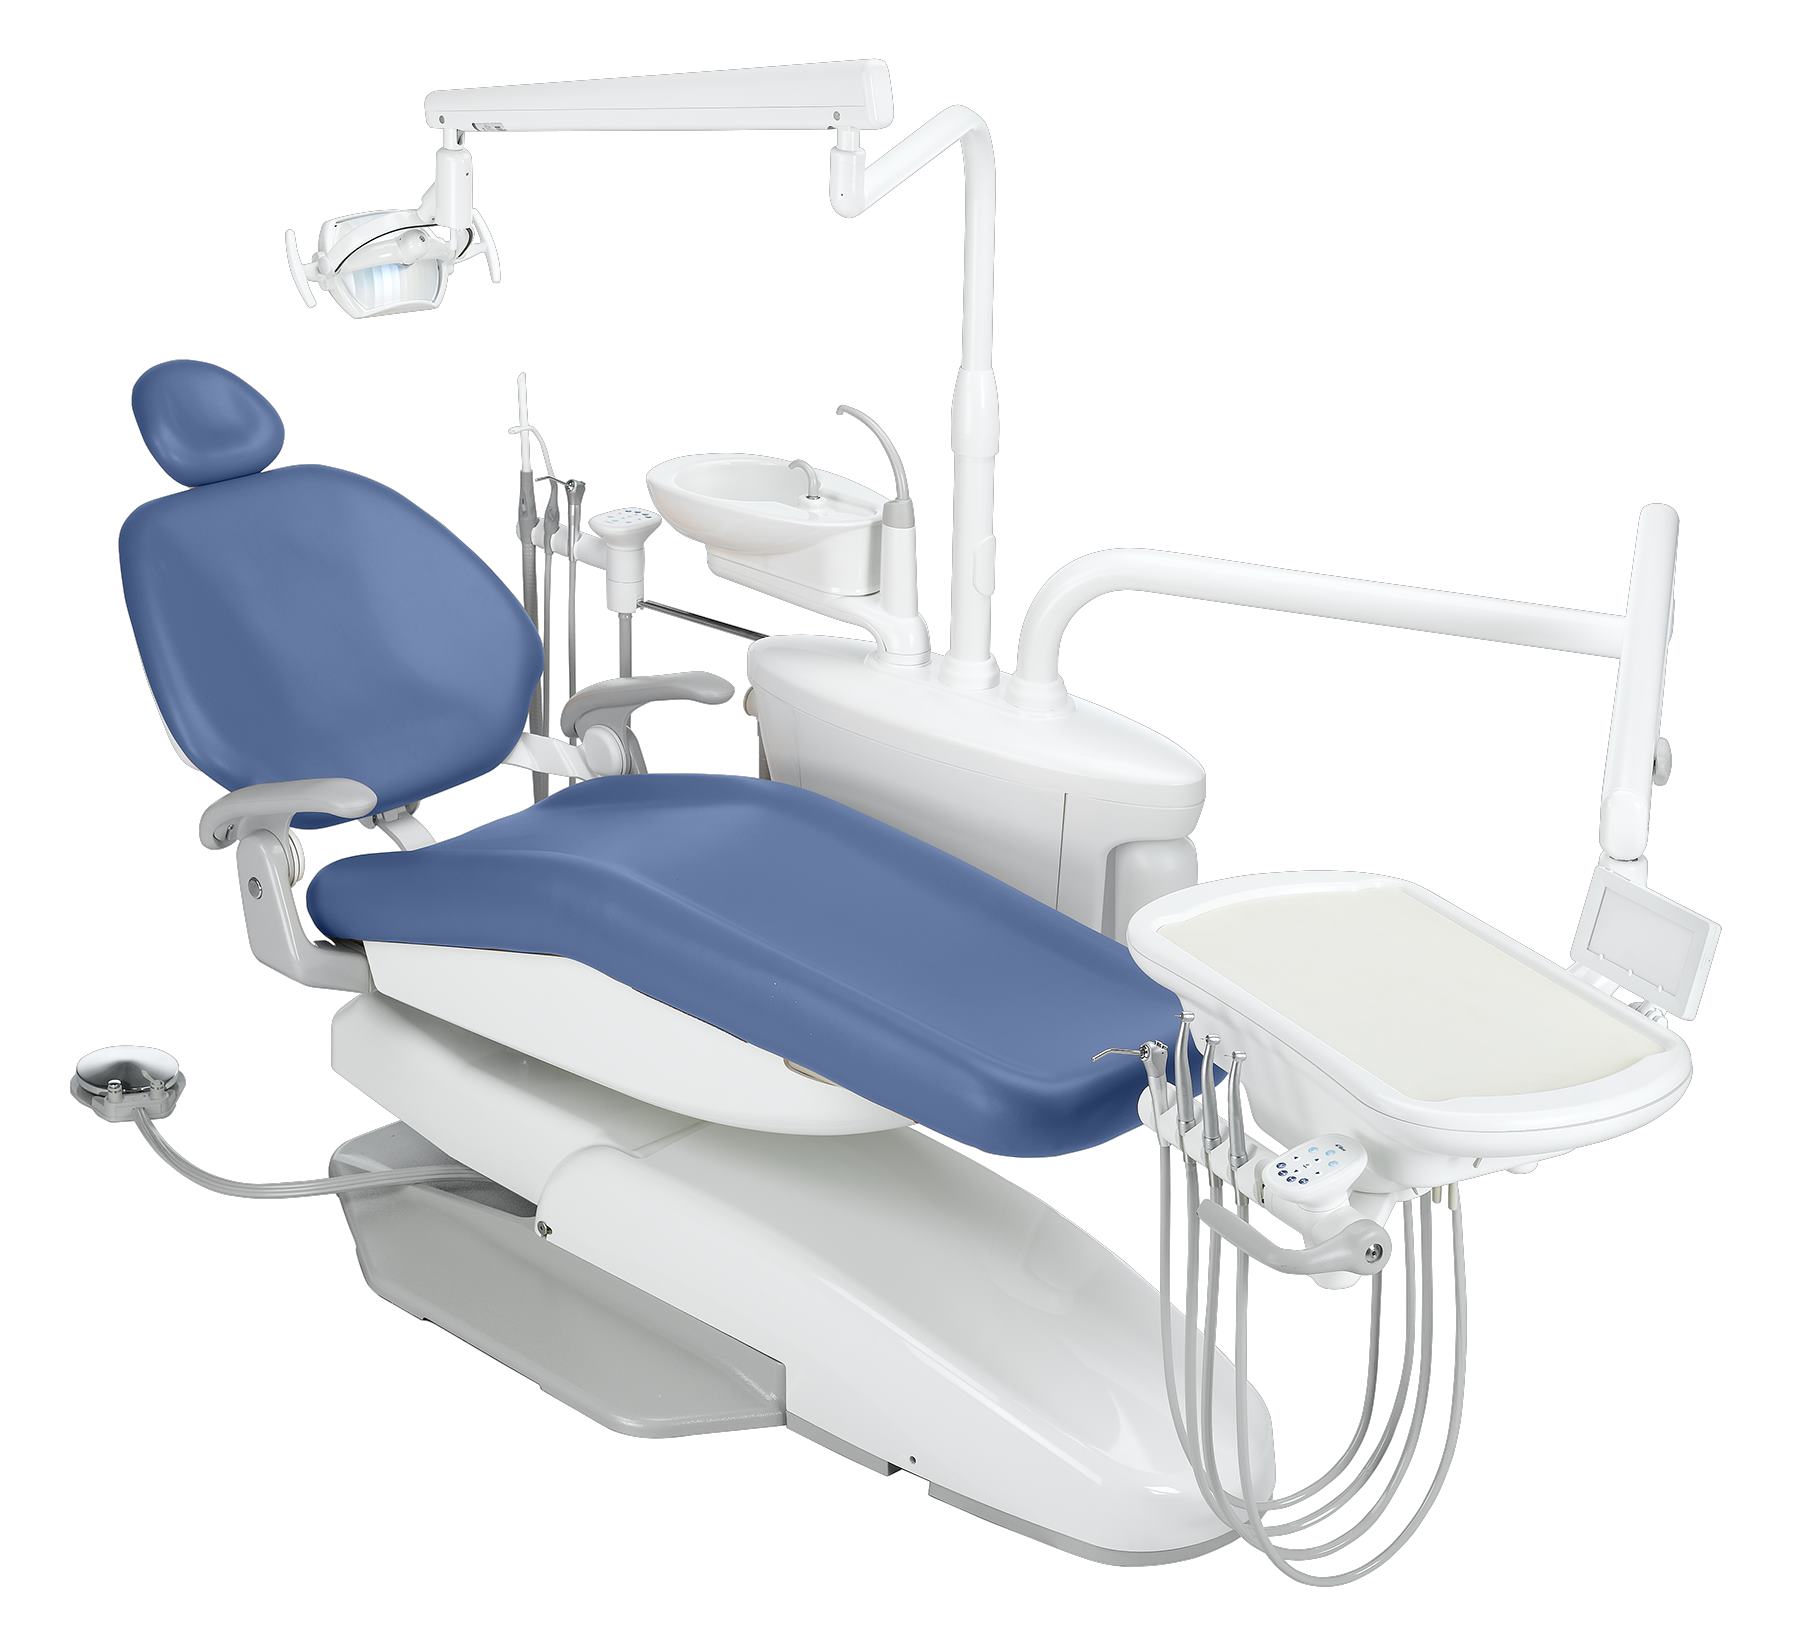 Tame shape unrelated Adec 200 Dental Chair | Dental Depot